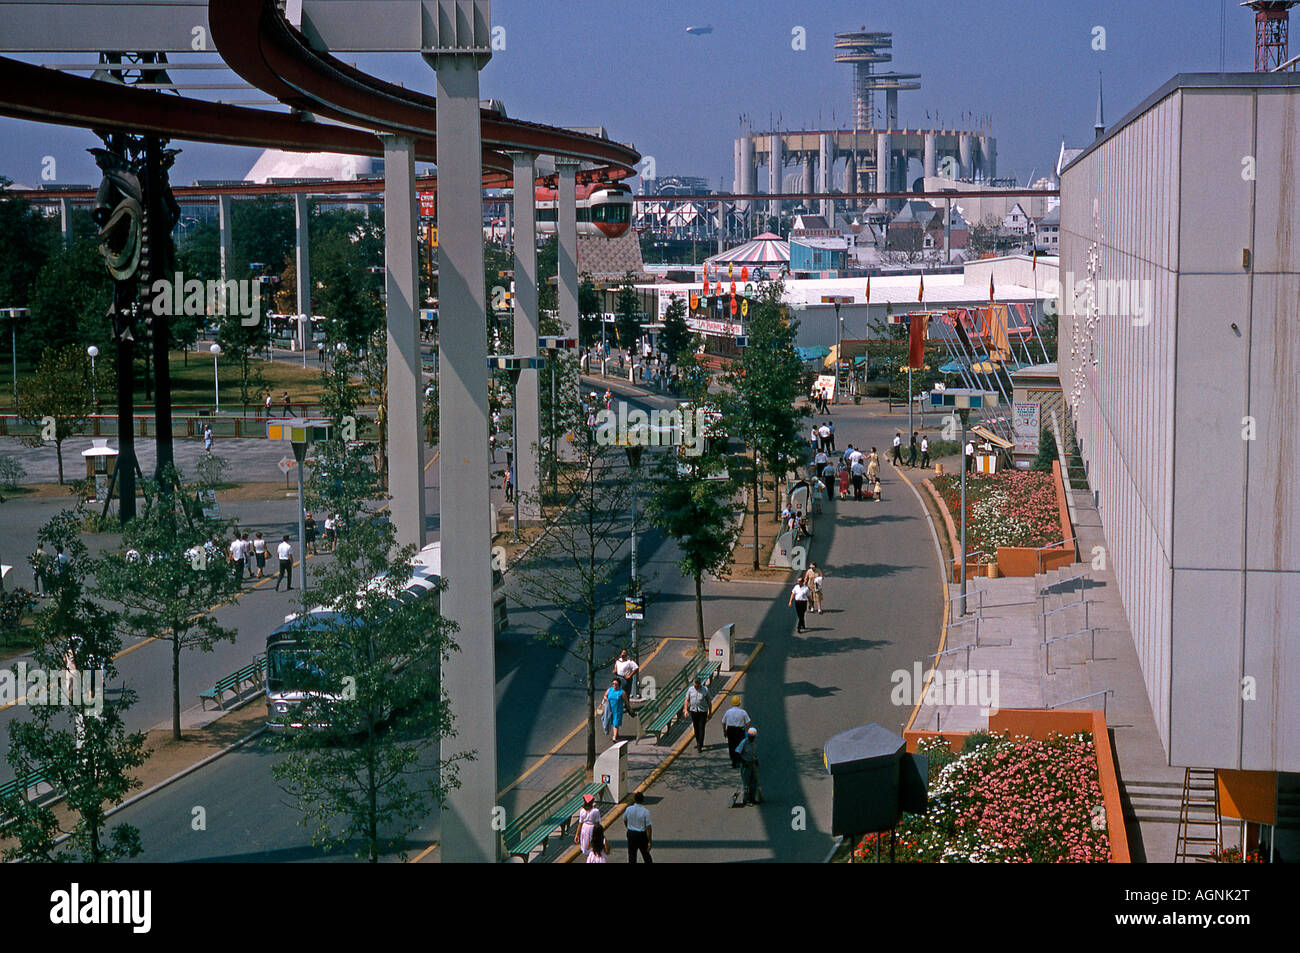 Monorail at New York World's Fair 1964-1965 Stock Photo